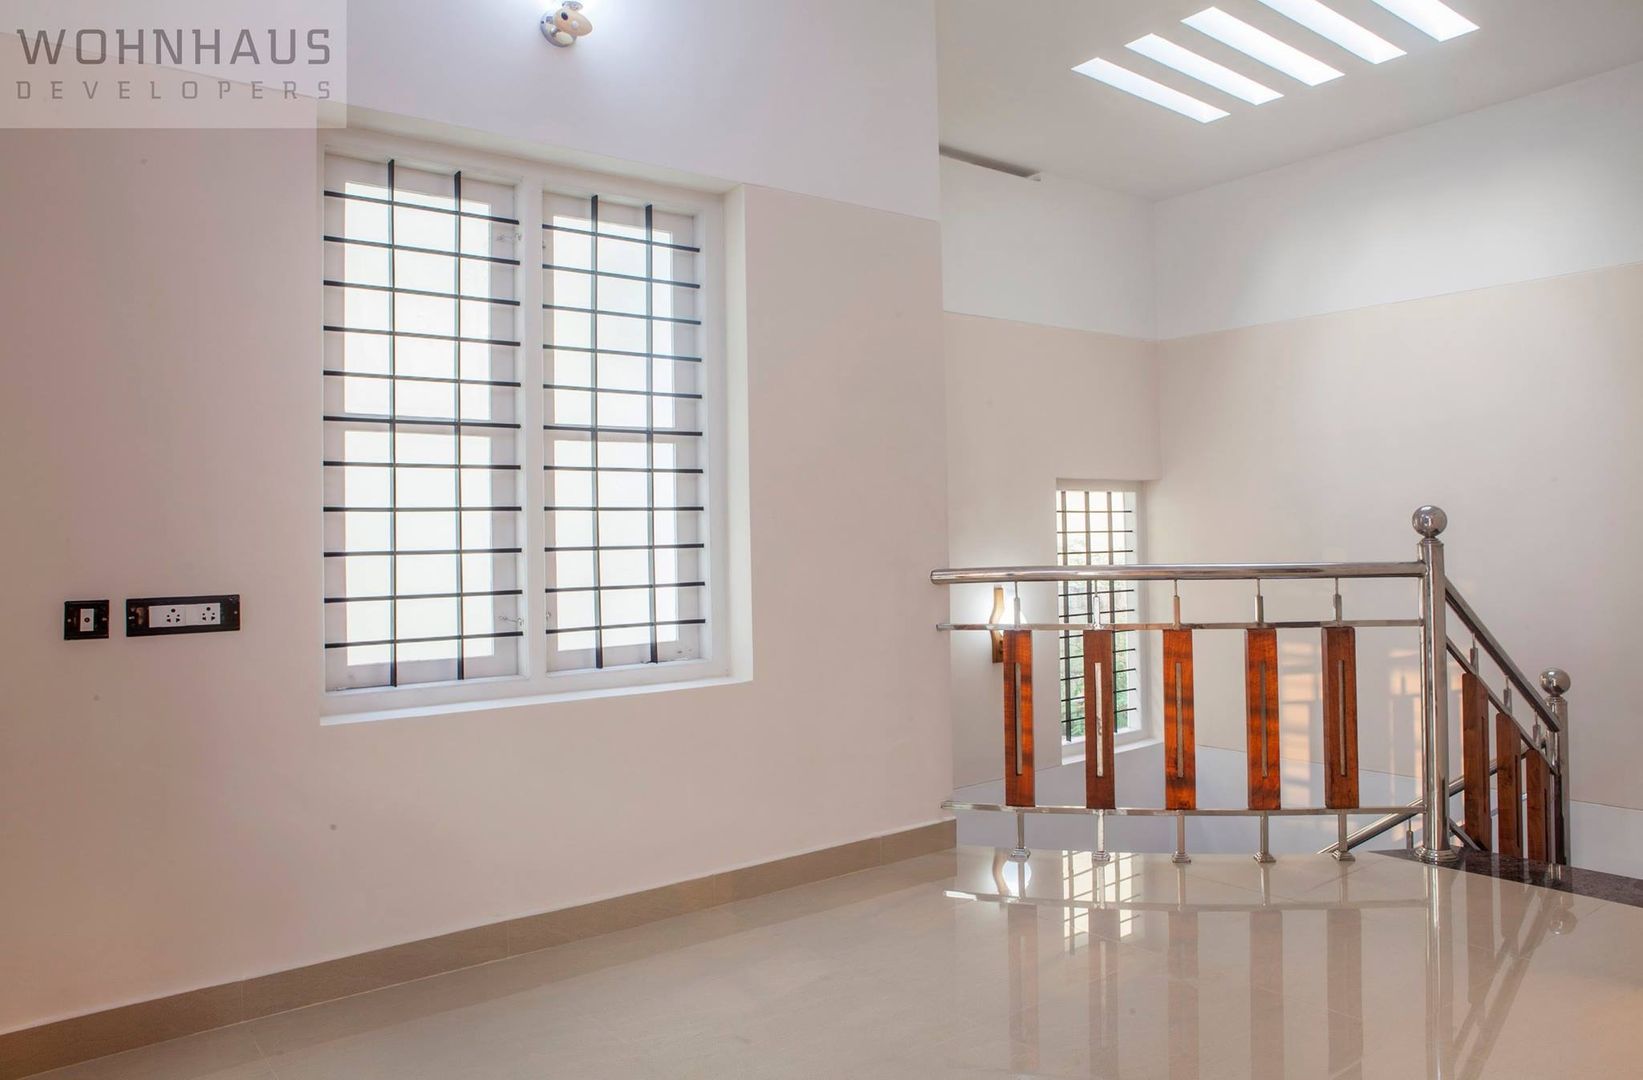 1400sqft House in Trivandrum, Wohnhaus Developers Wohnhaus Developers Modern Corridor, Hallway and Staircase Ceramic